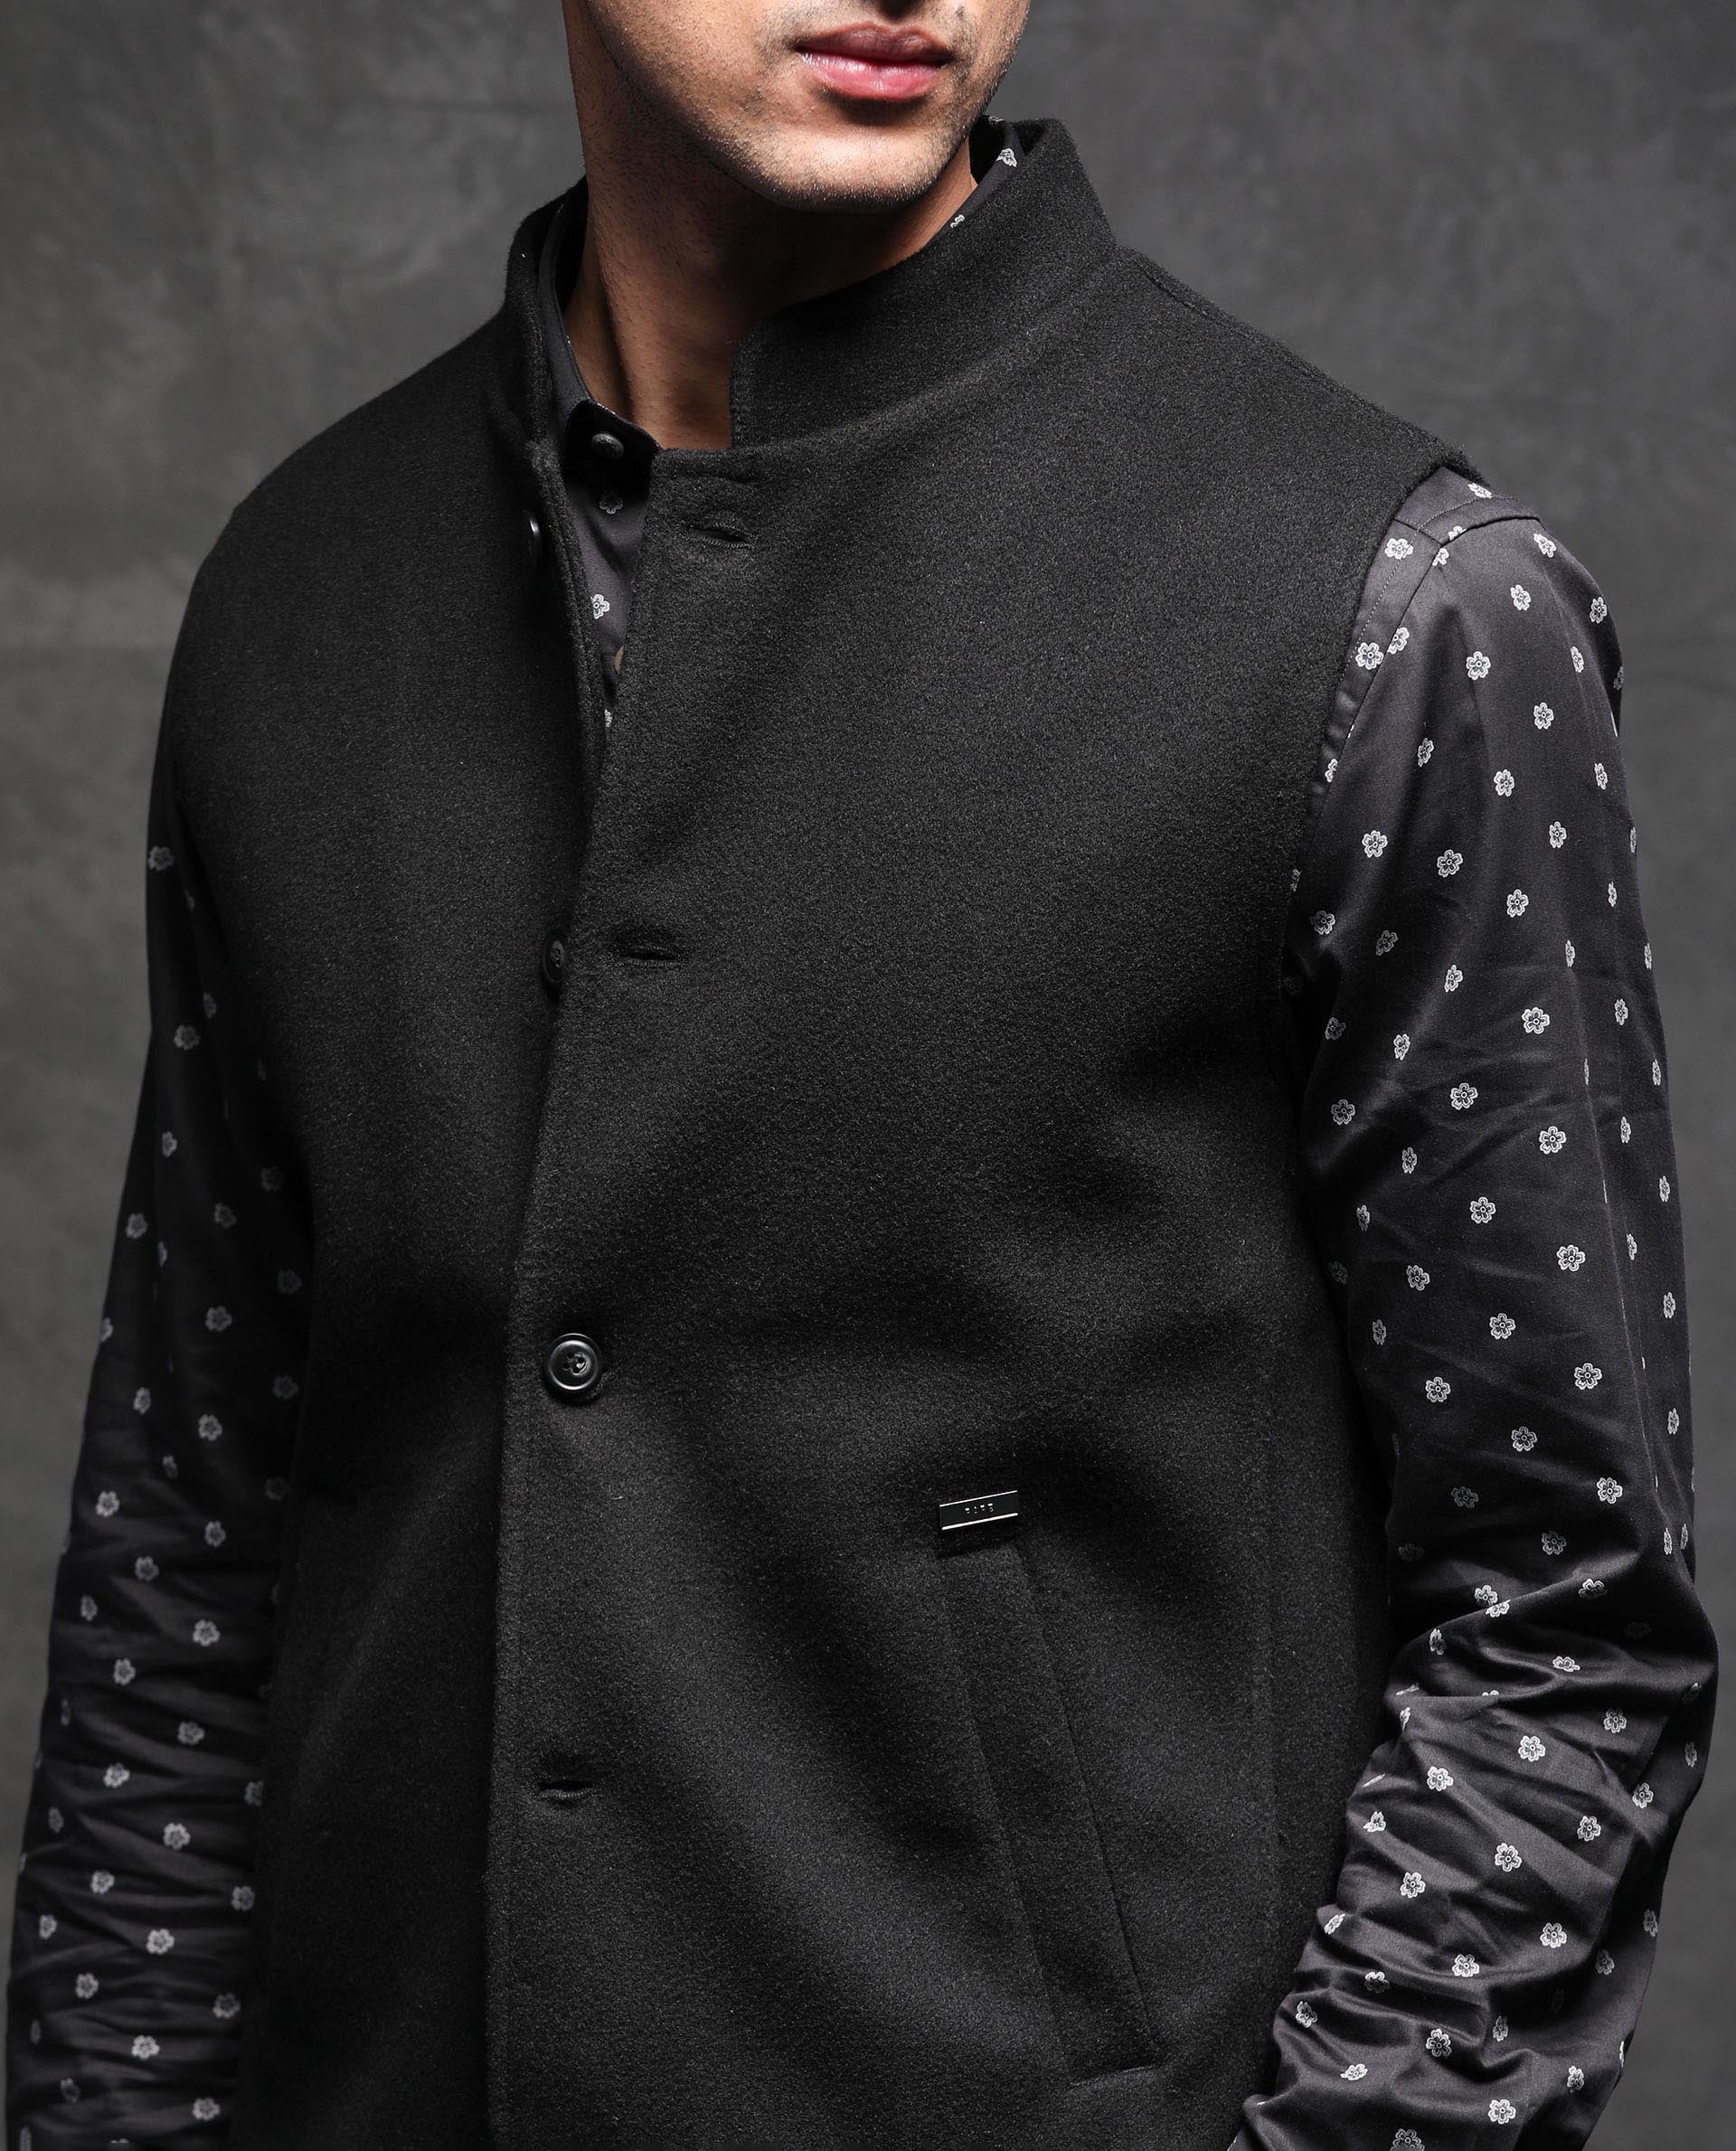 MONCLER MALRIF black sleeveless jacket